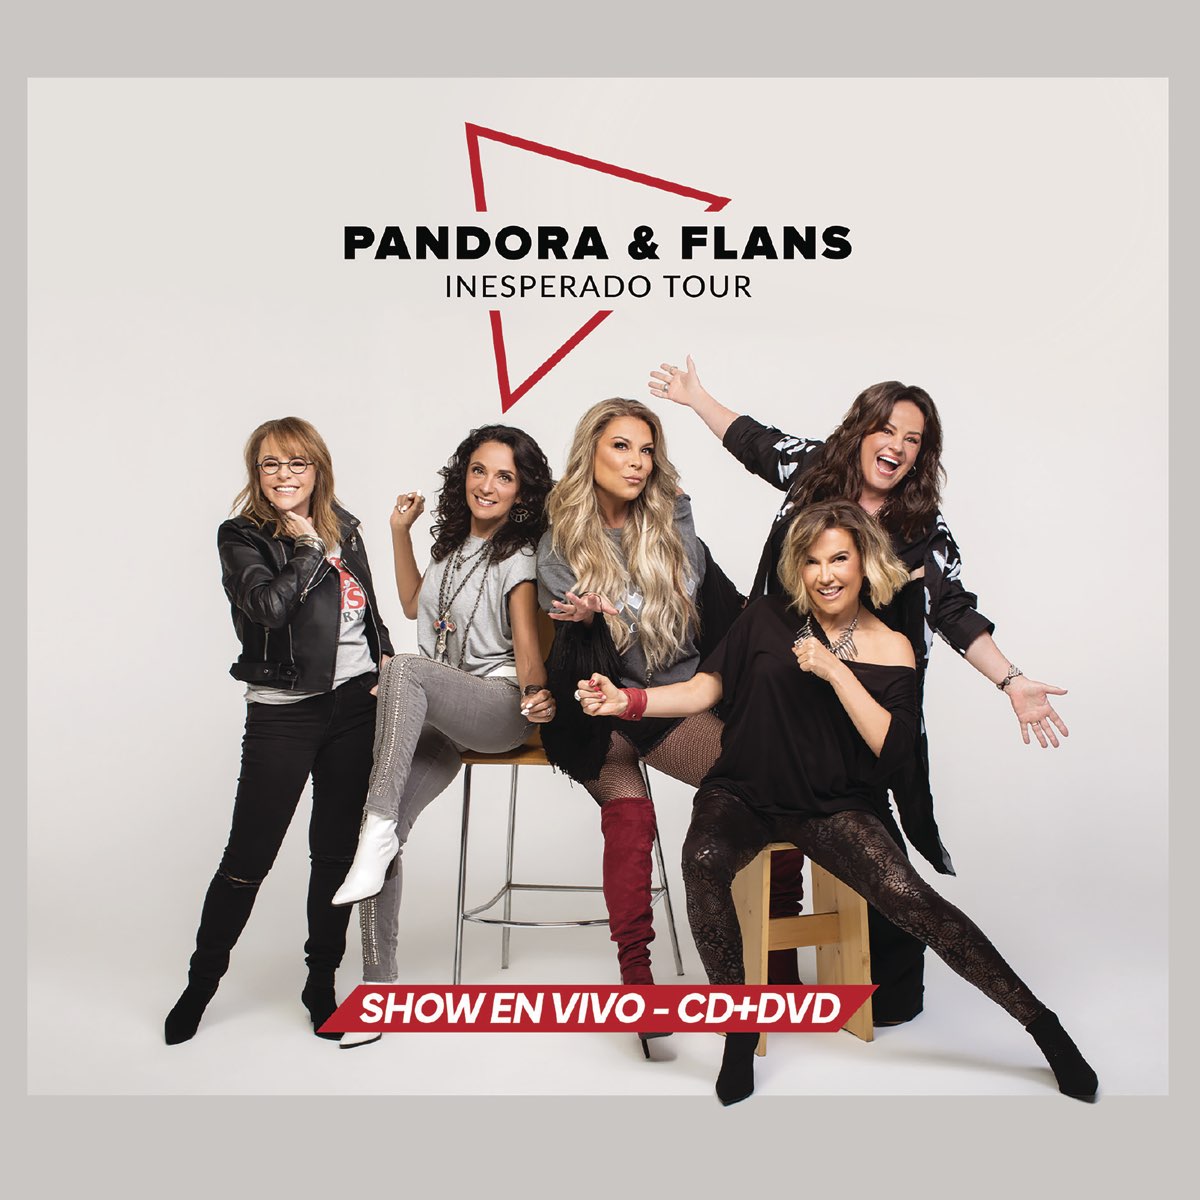 Inesperado Tour (En Vivo)” álbum de Pandora & Flans en Apple Music